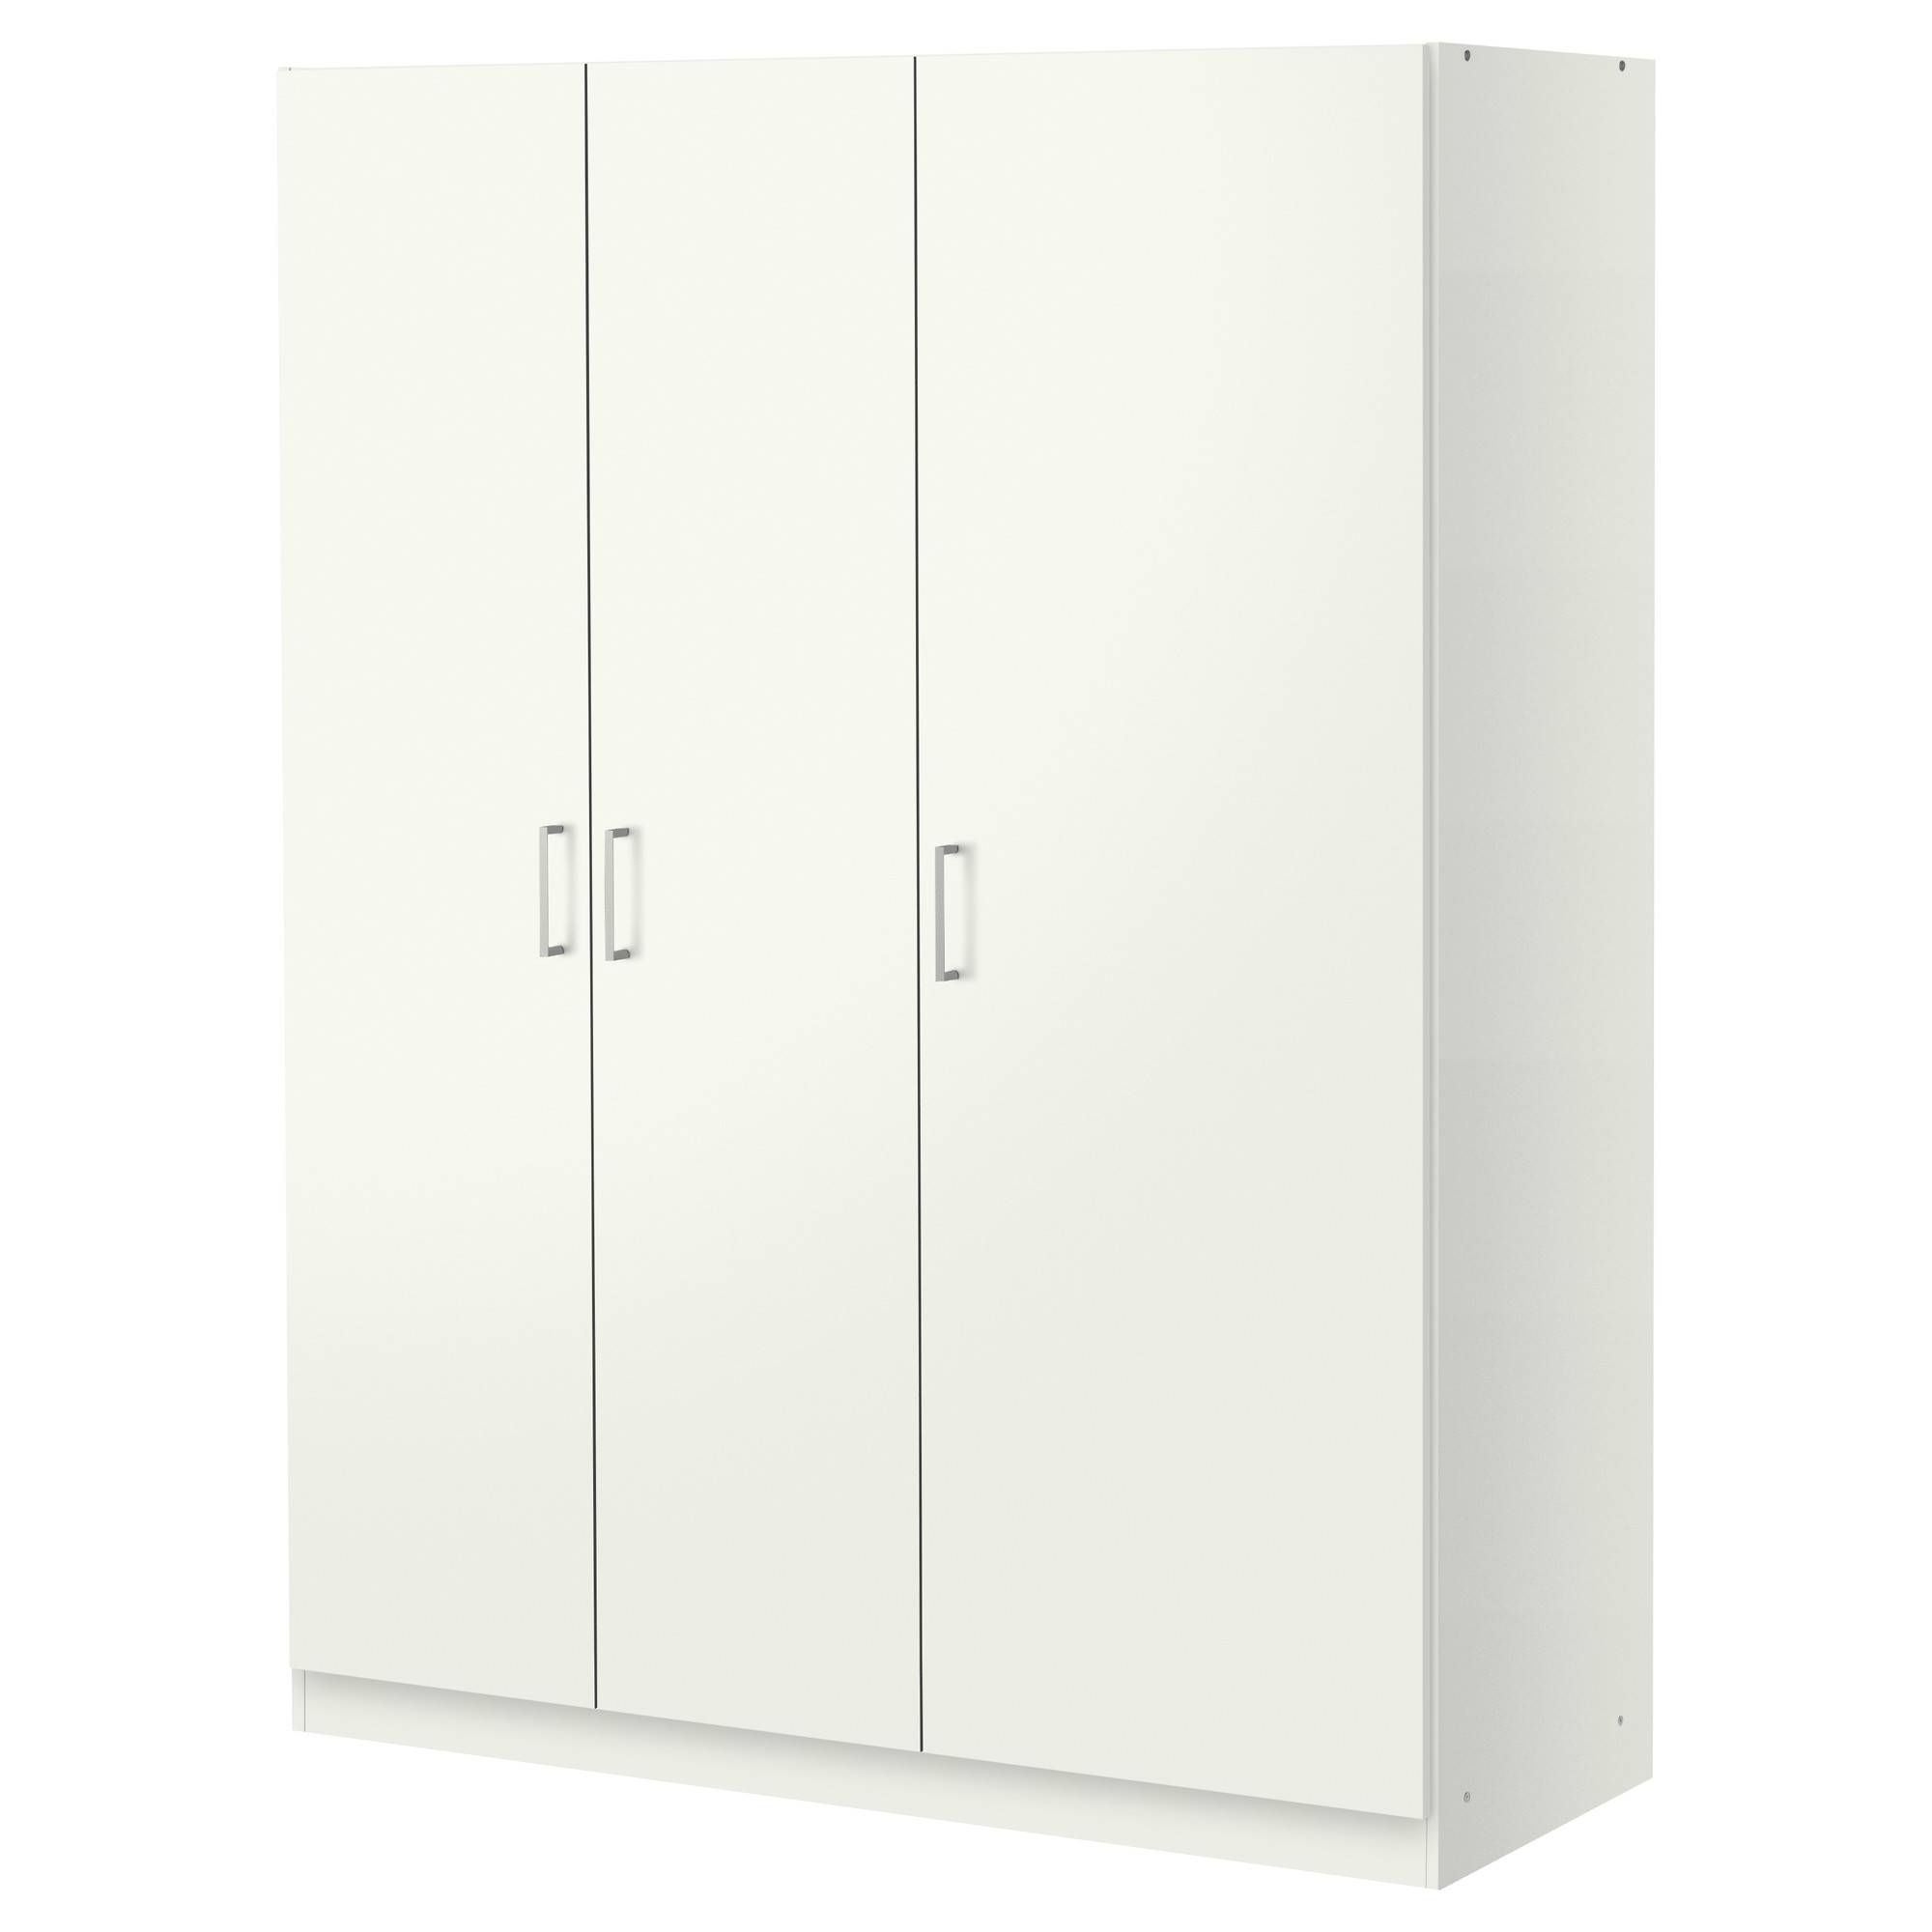 Dombås Wardrobe White 140x181 Cm – Ikea With White Three Door Wardrobes (View 5 of 15)